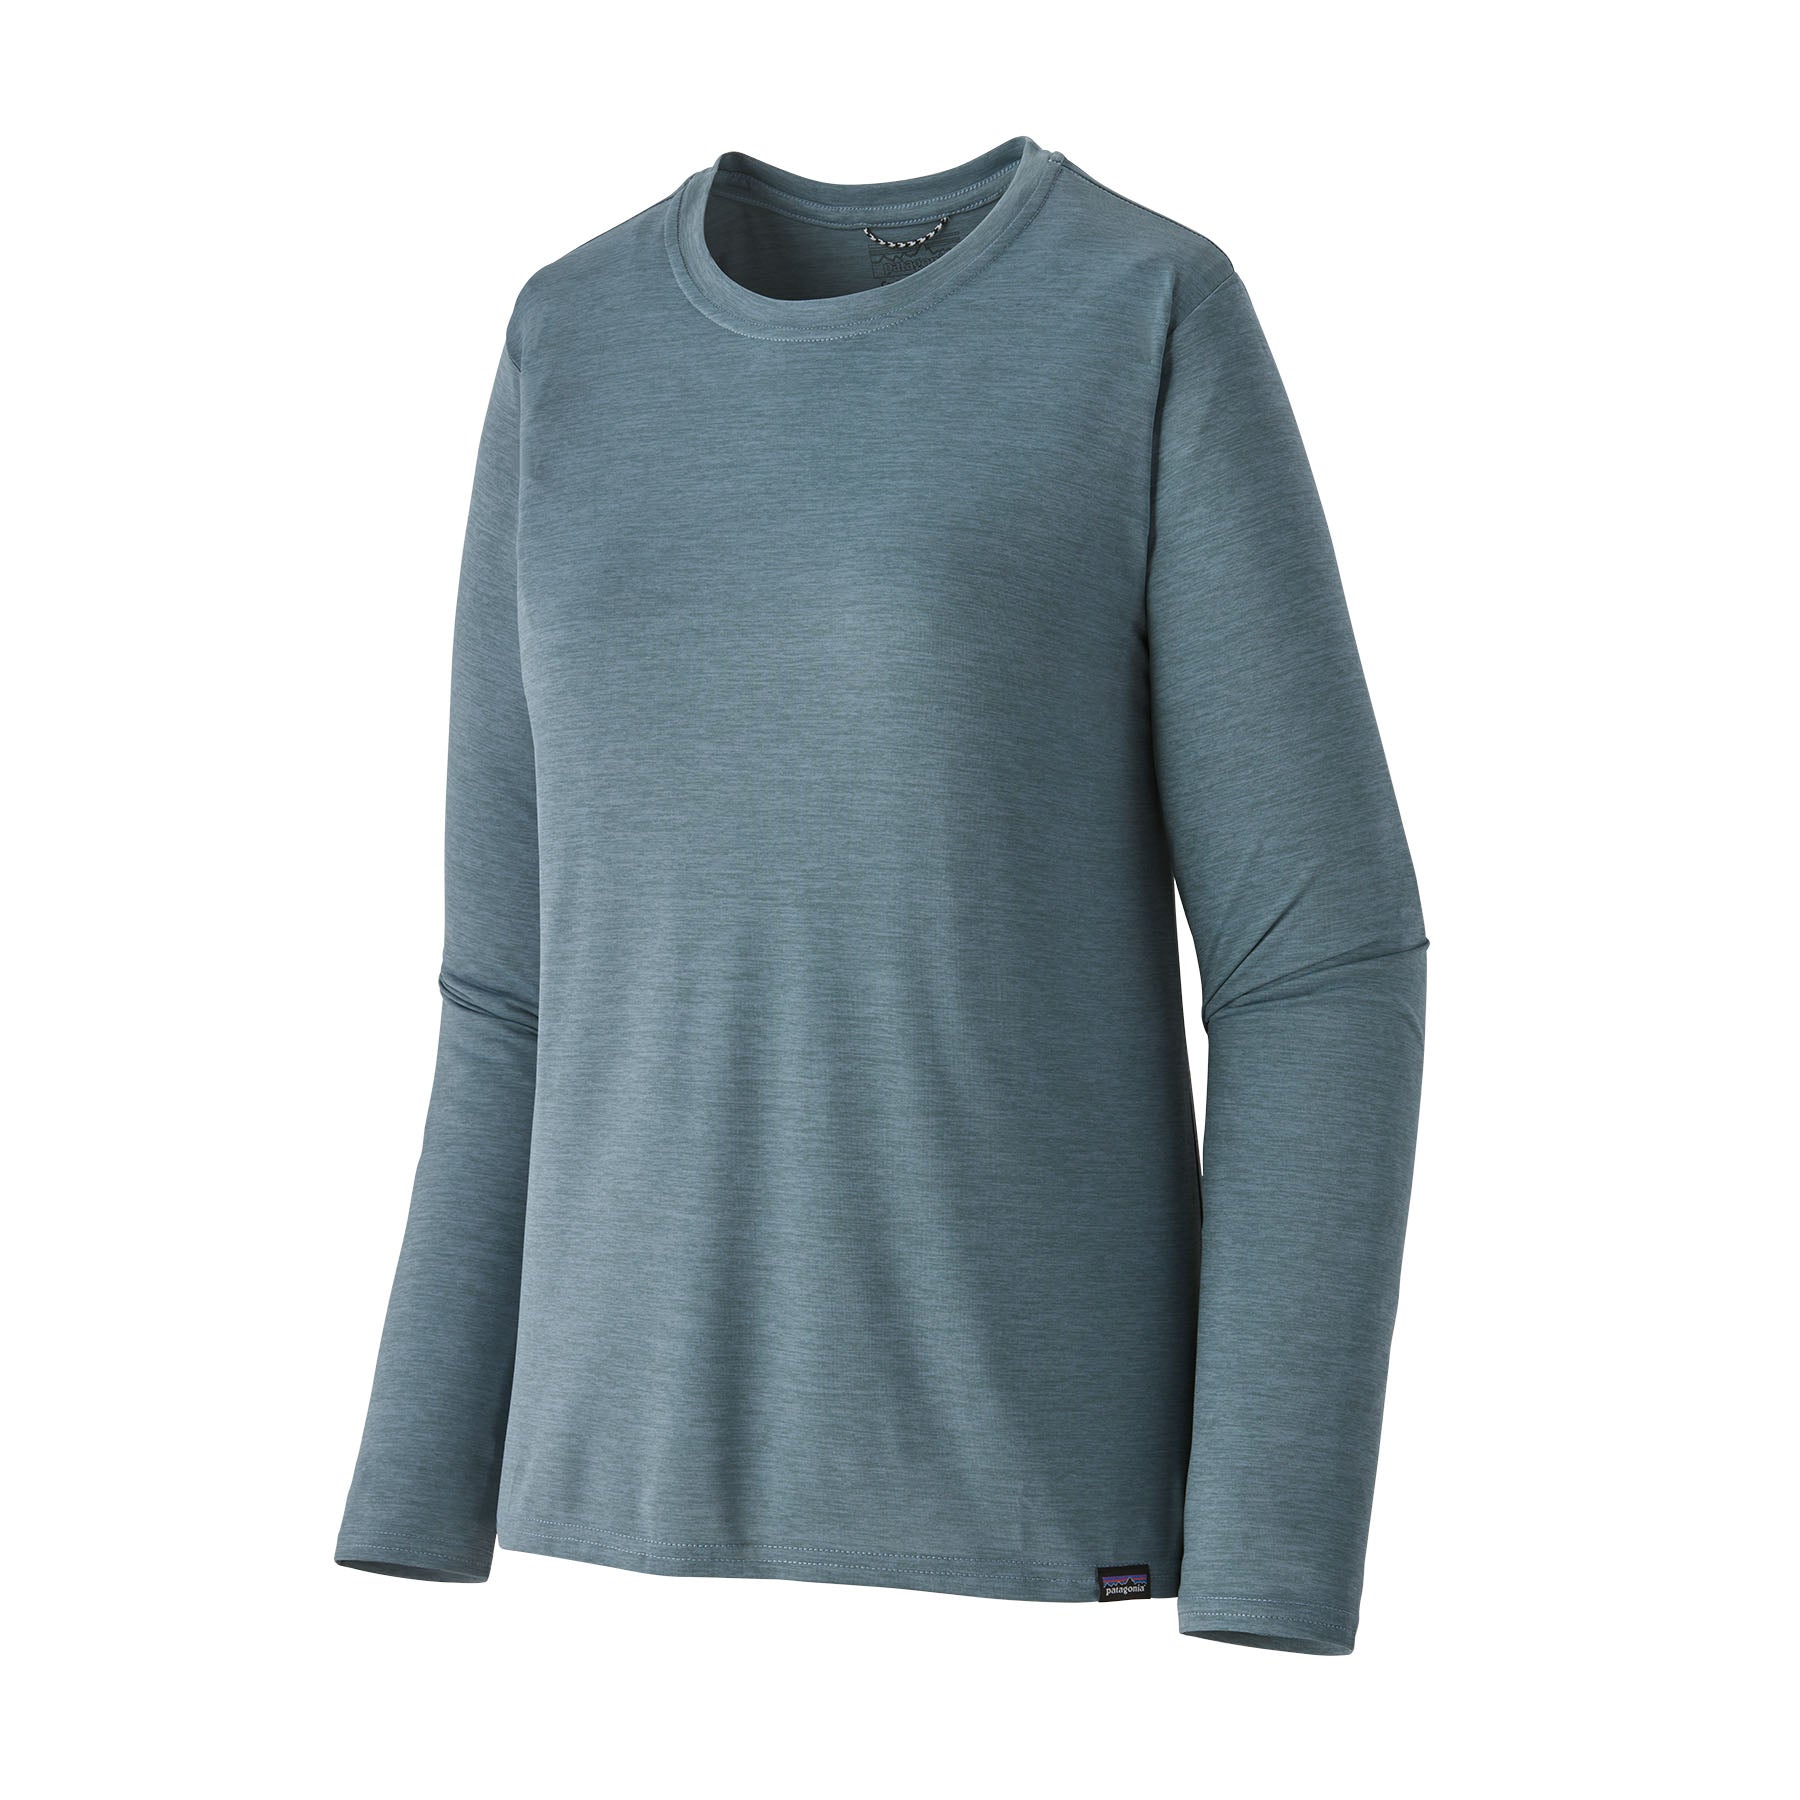 Women's Long-Sleeved Capilene® Cool Daily Shirt